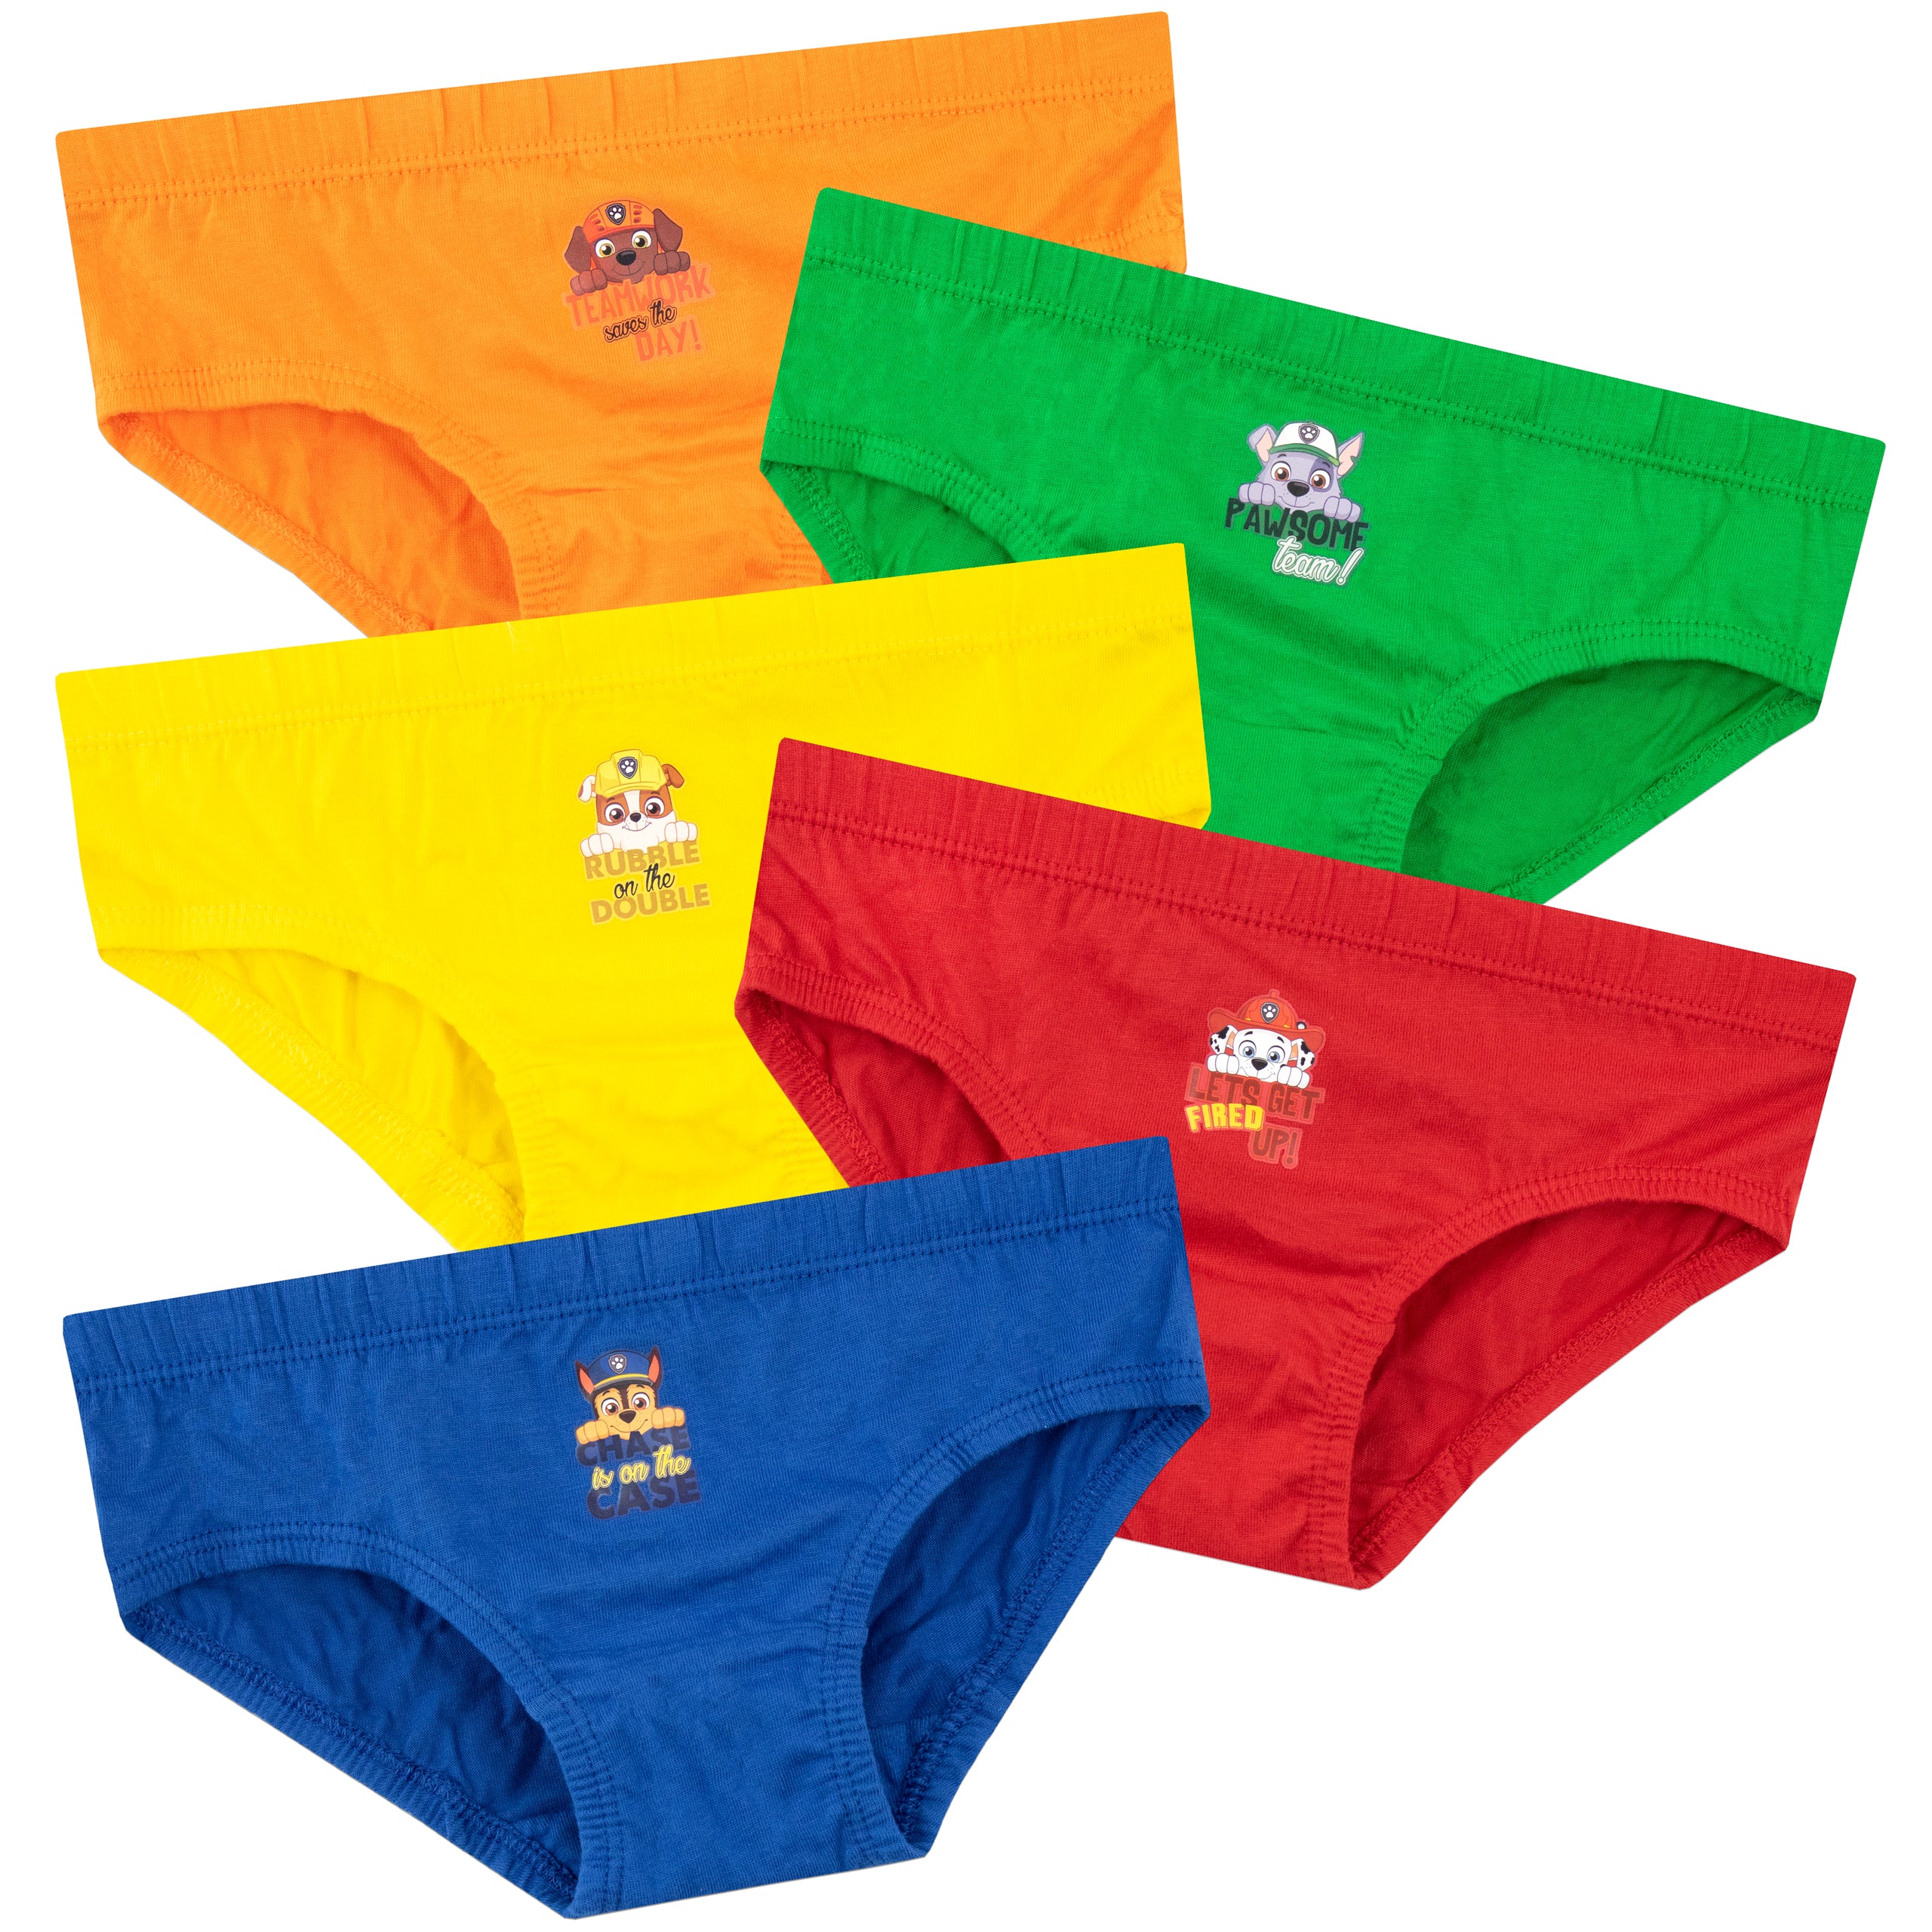 Boys Paw Patrol Underwear Pack of 5